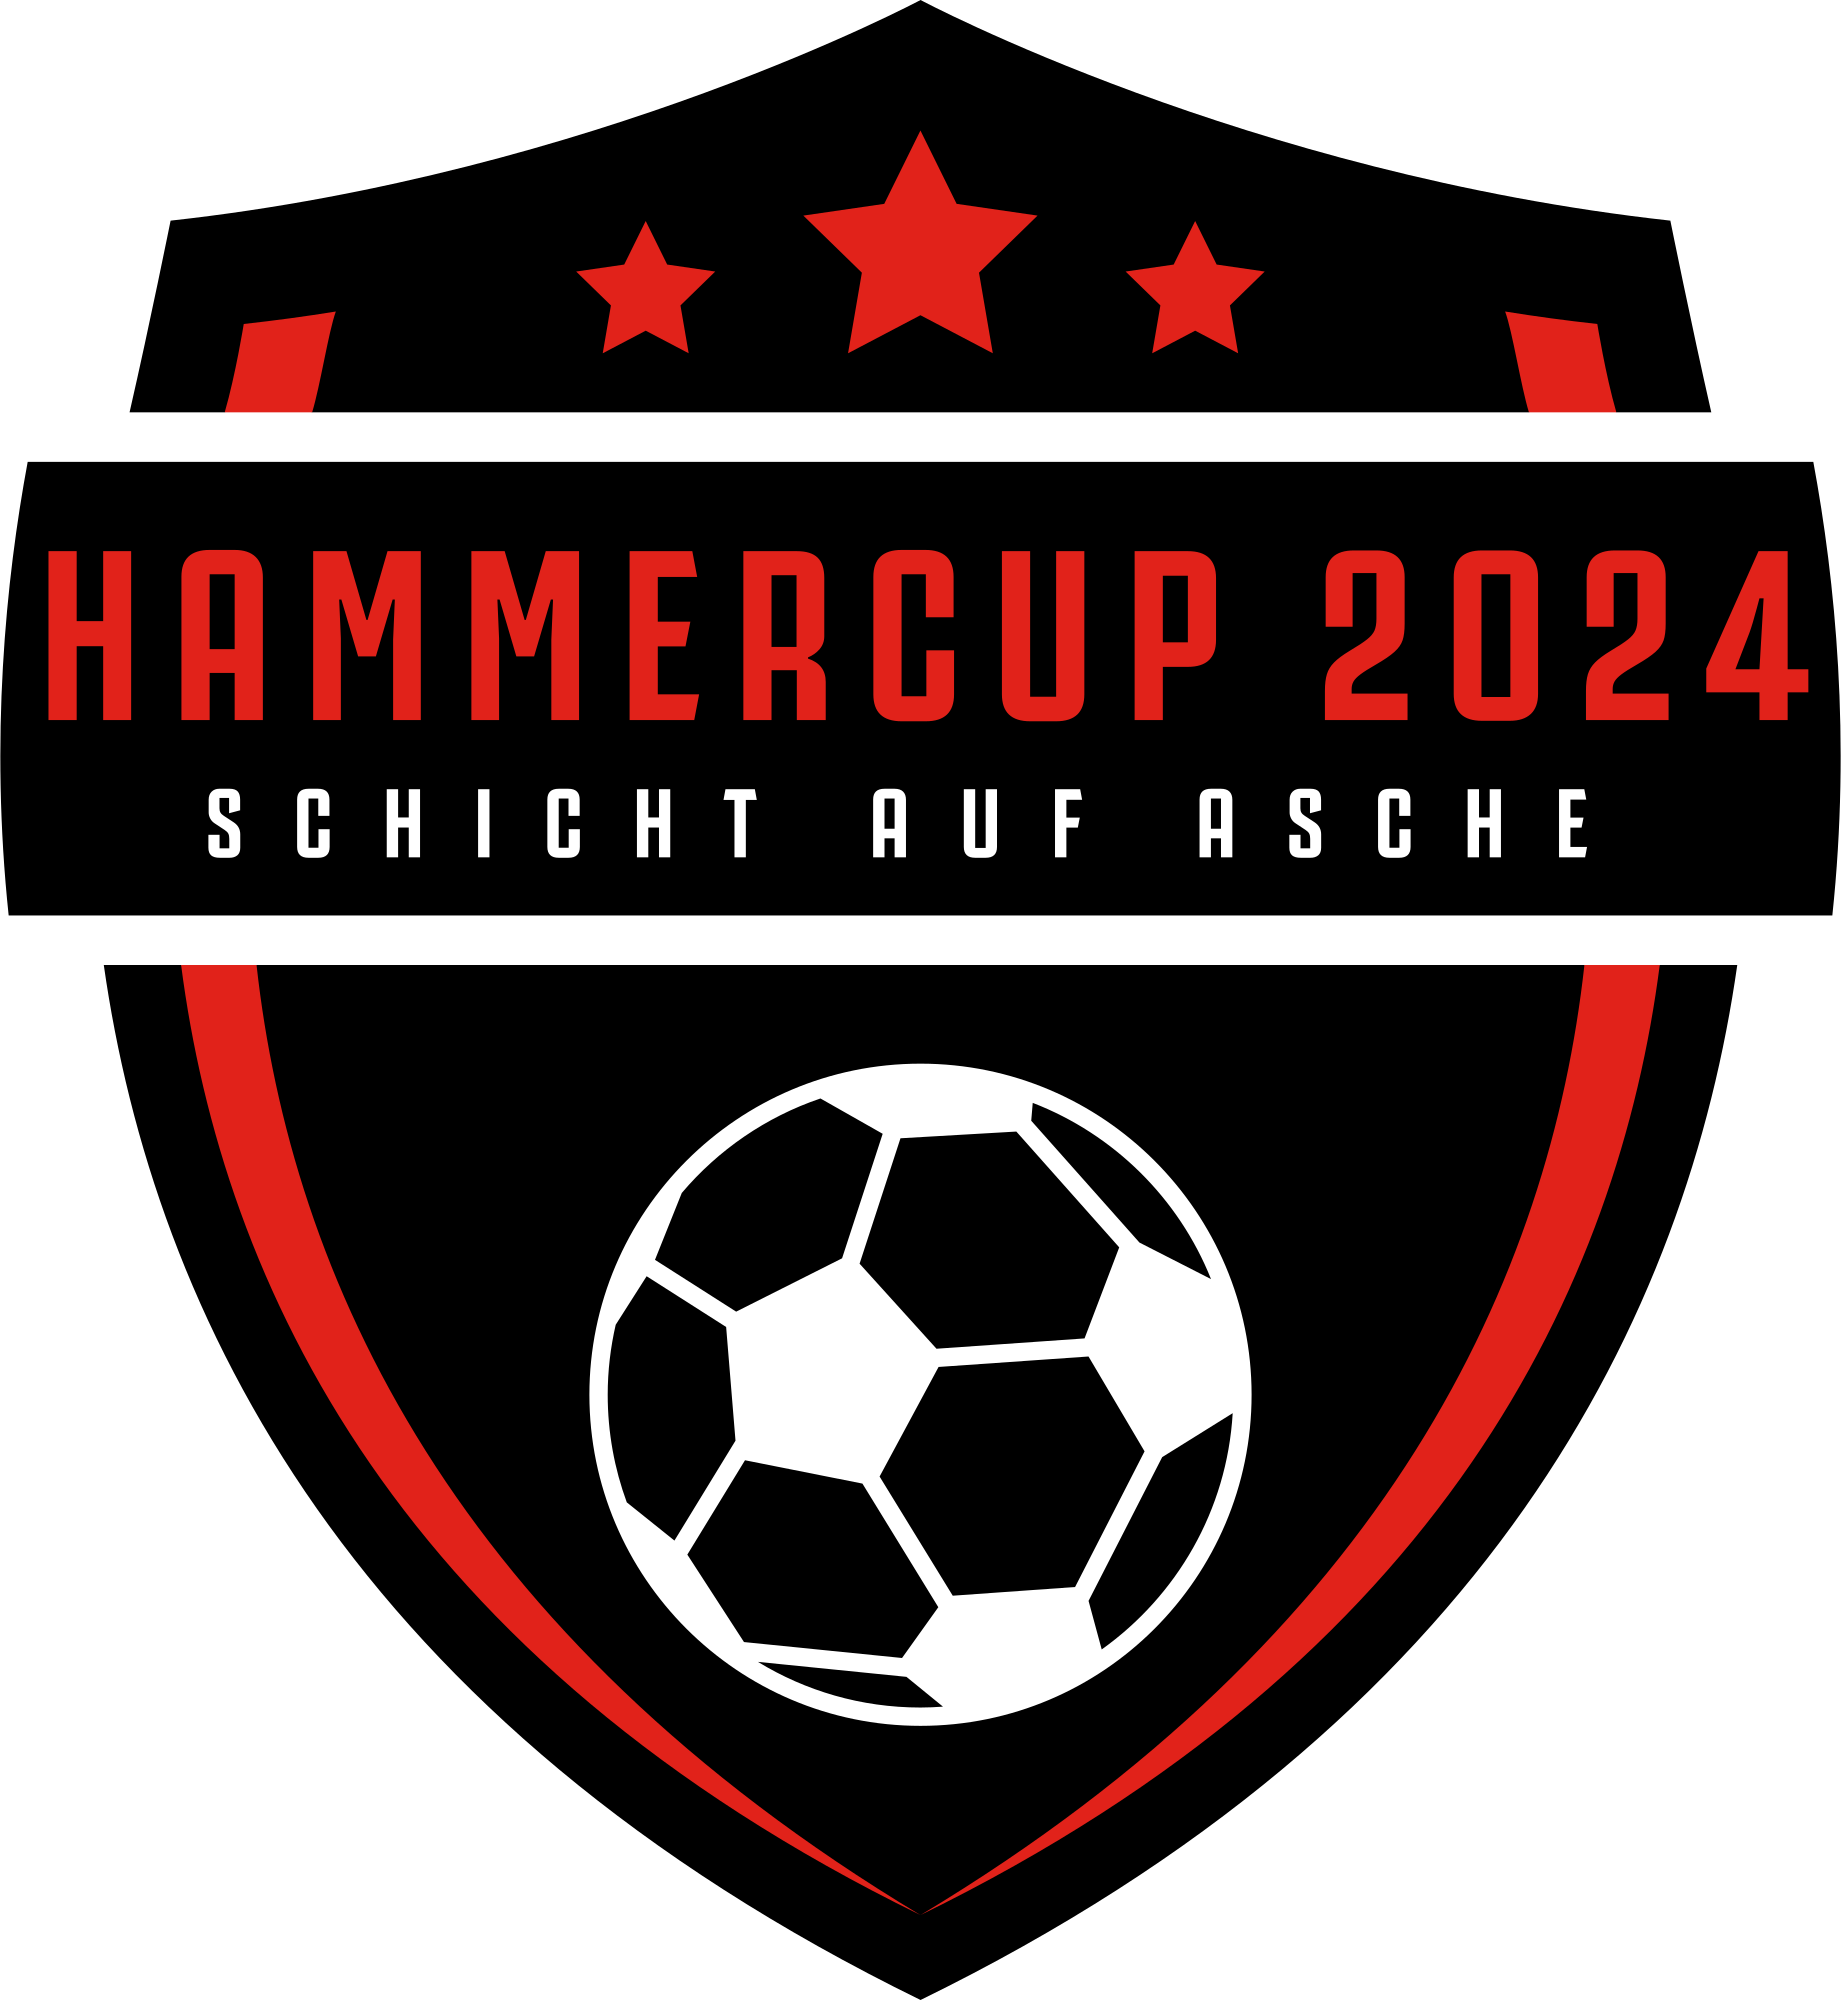 Hammercup 2024